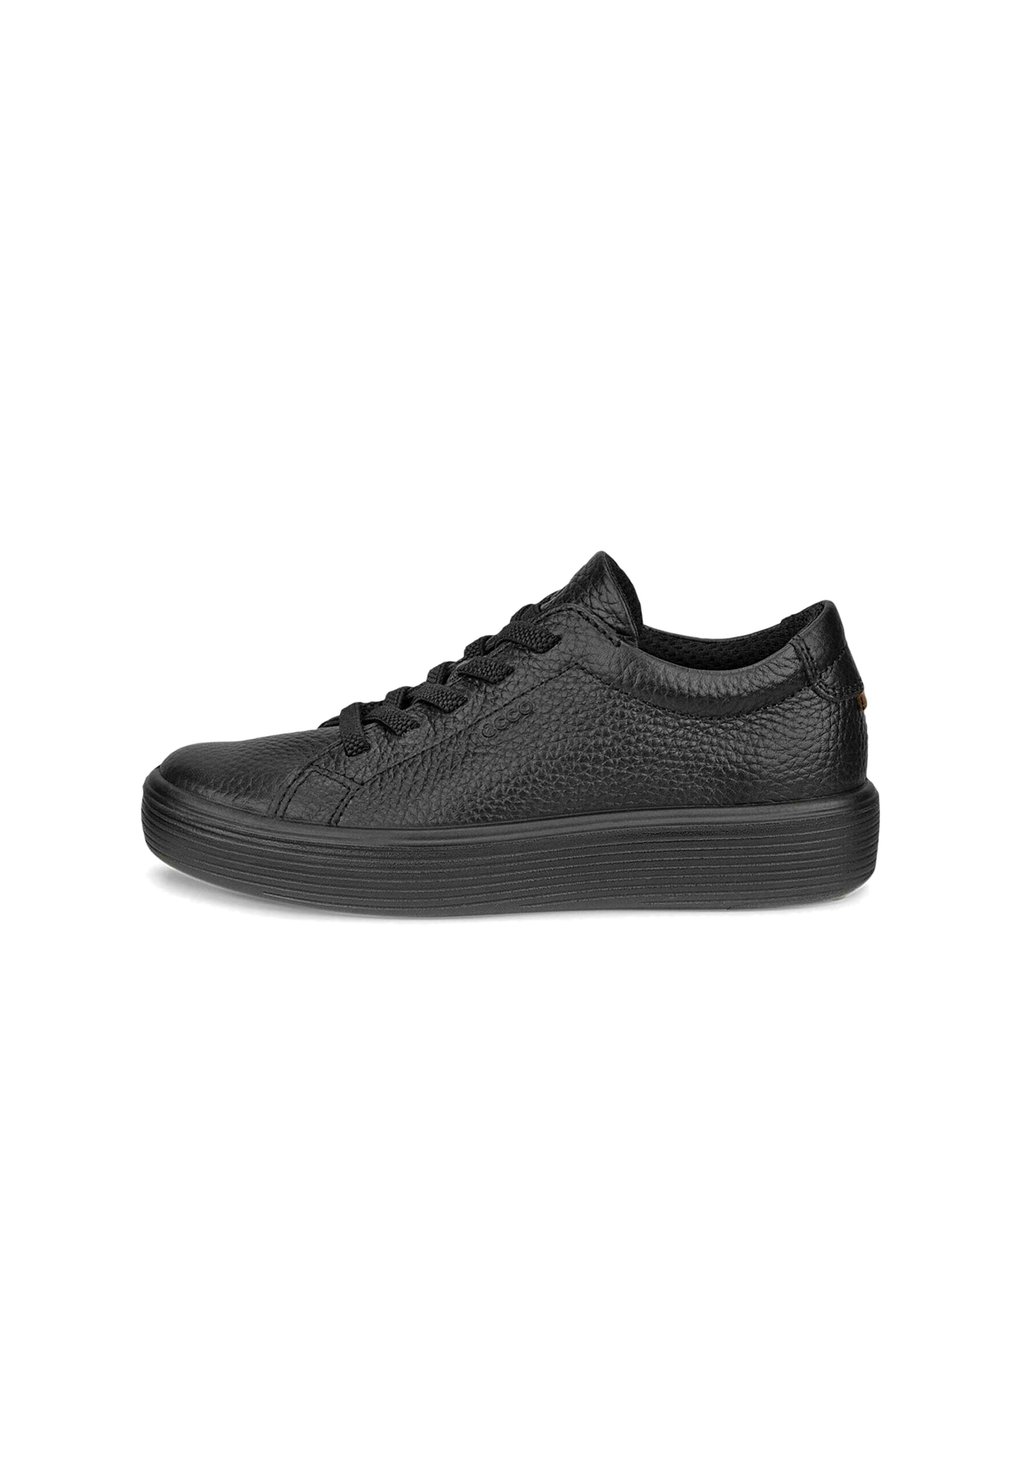 Спортивные туфли на шнуровке ECCO, цвет black